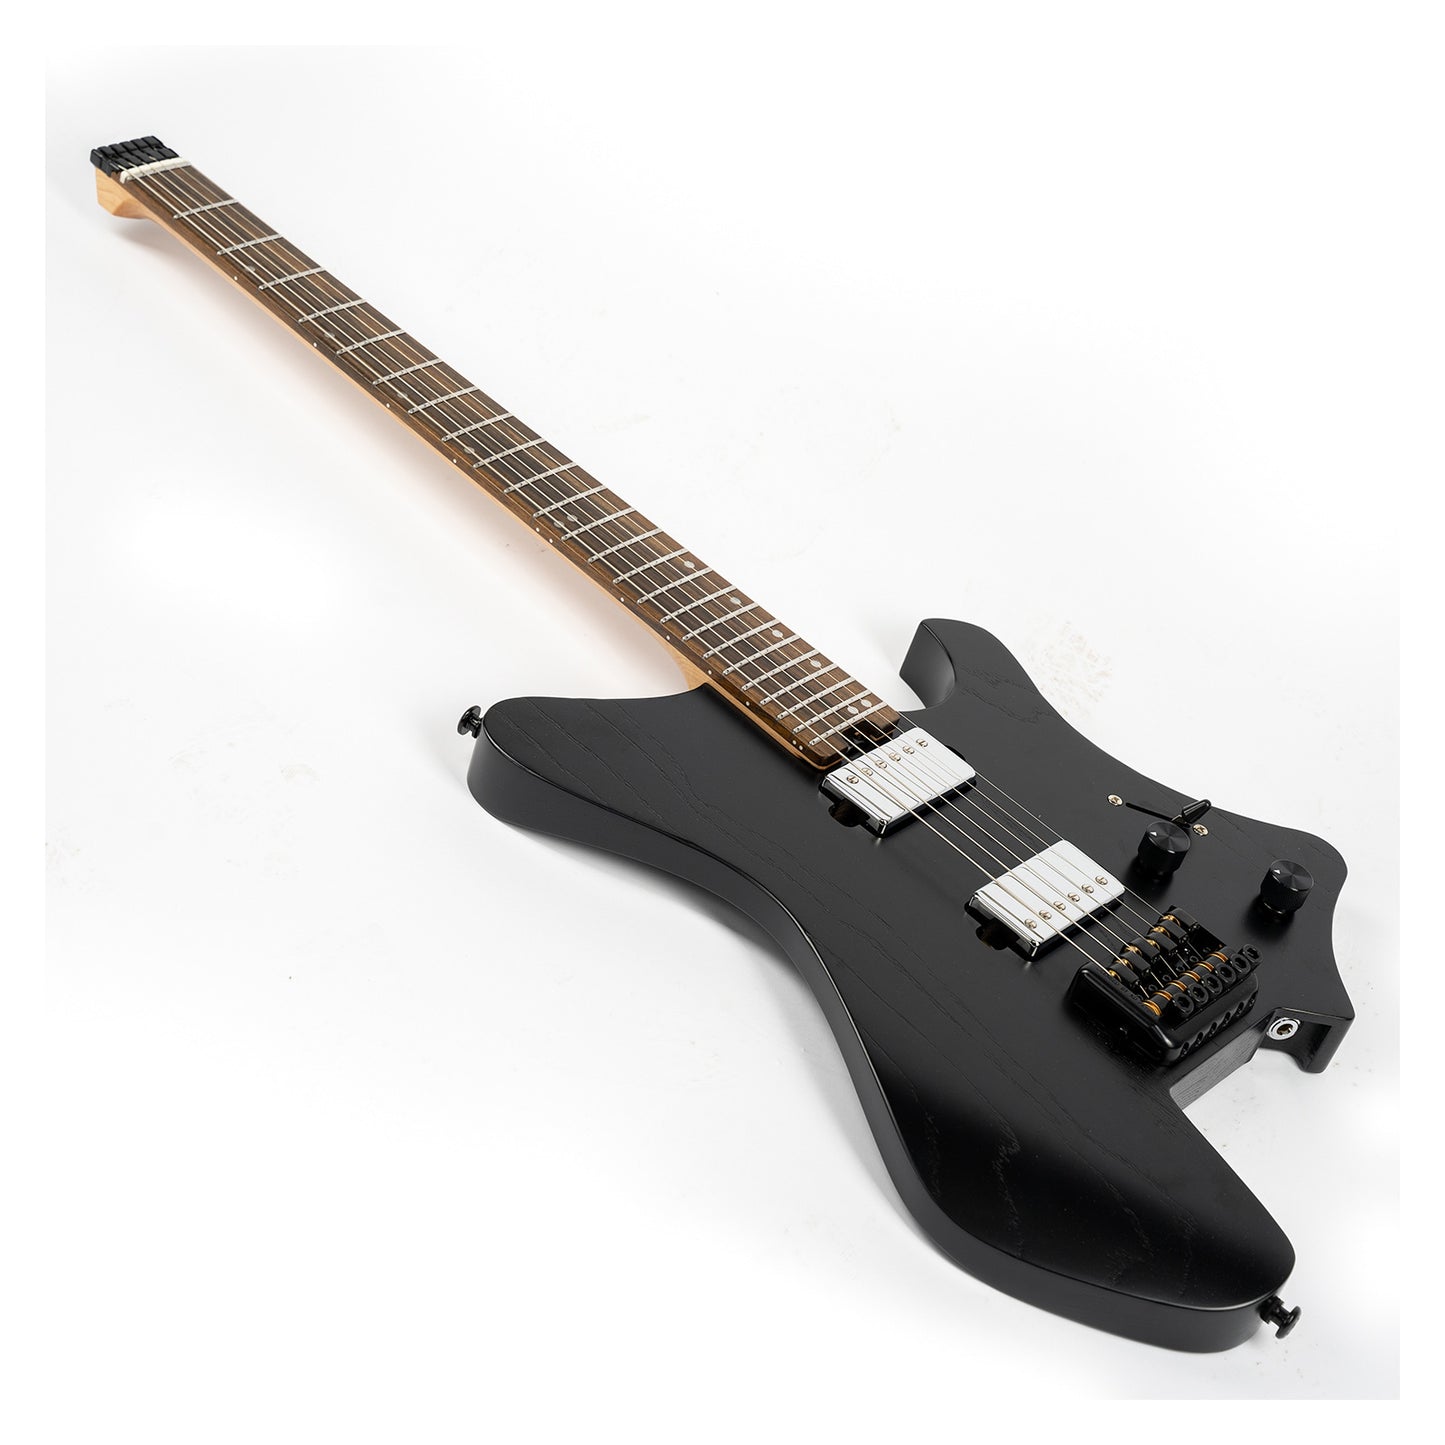 EART electric guitar GW2 NBK black without veener